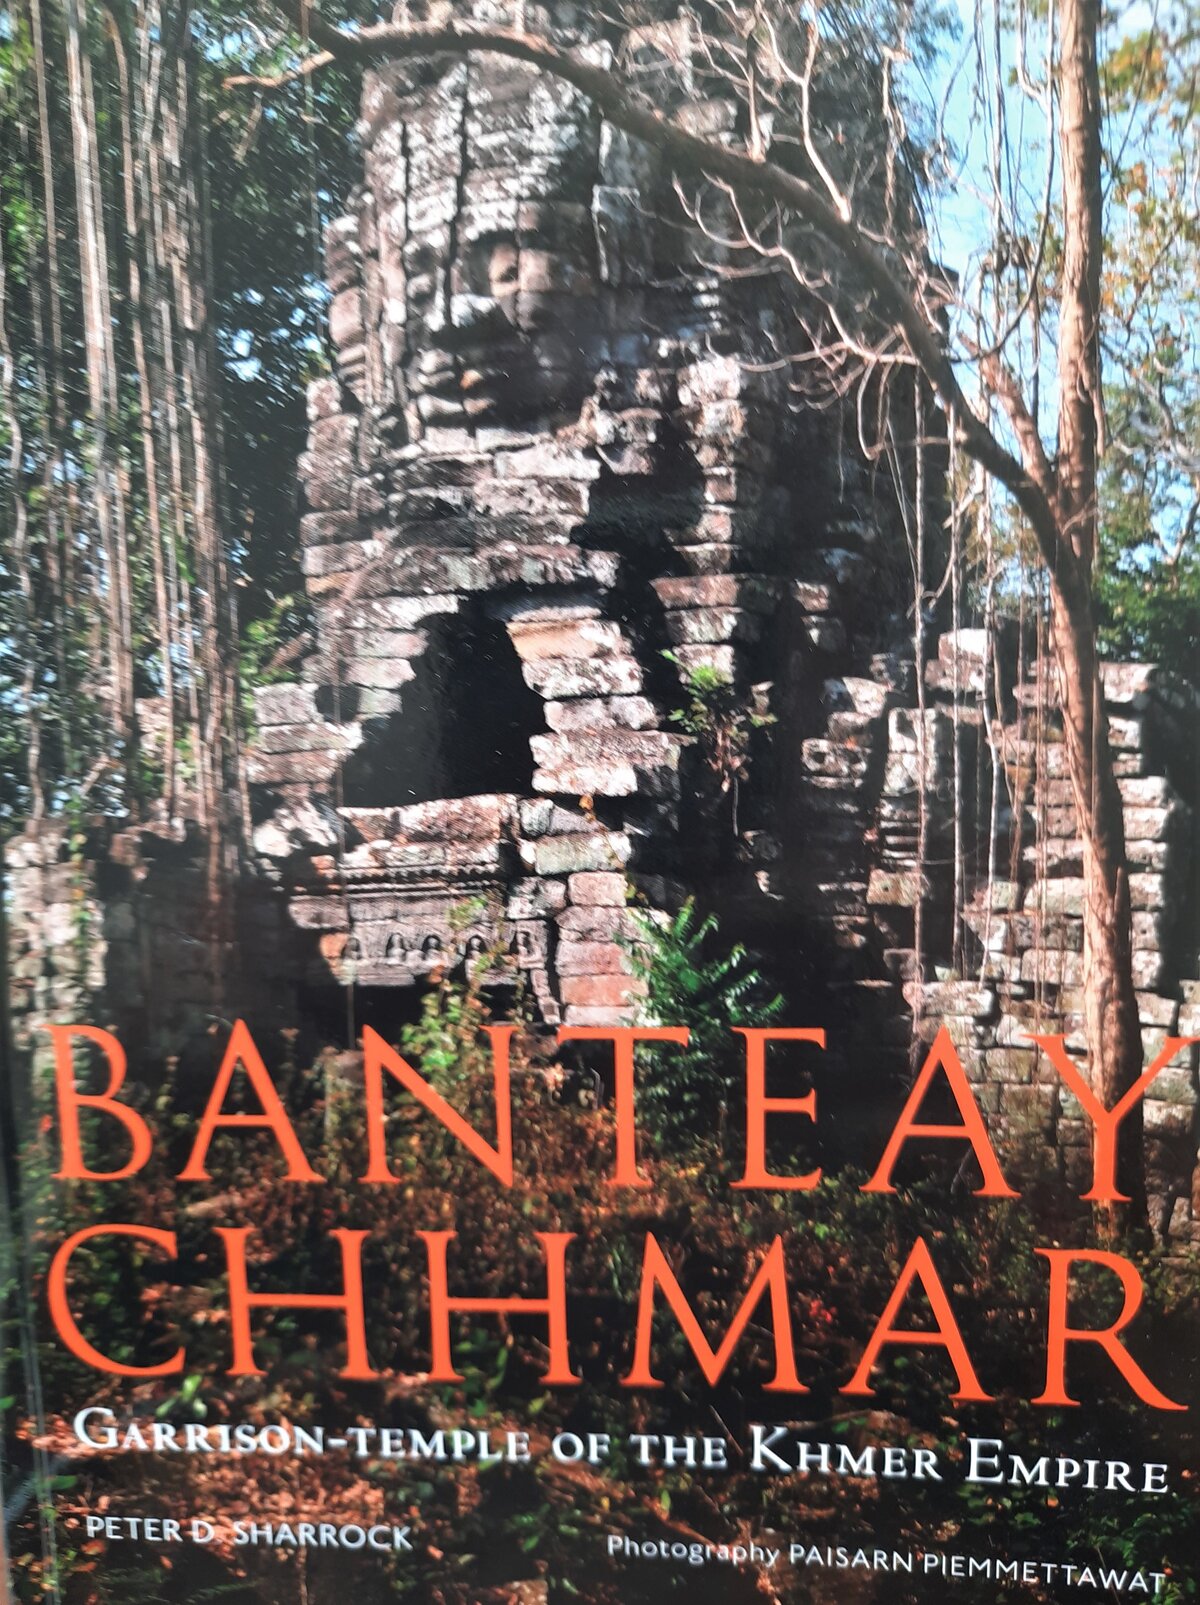 Banteay&#x20;Chhmar&#x20;Sharrock